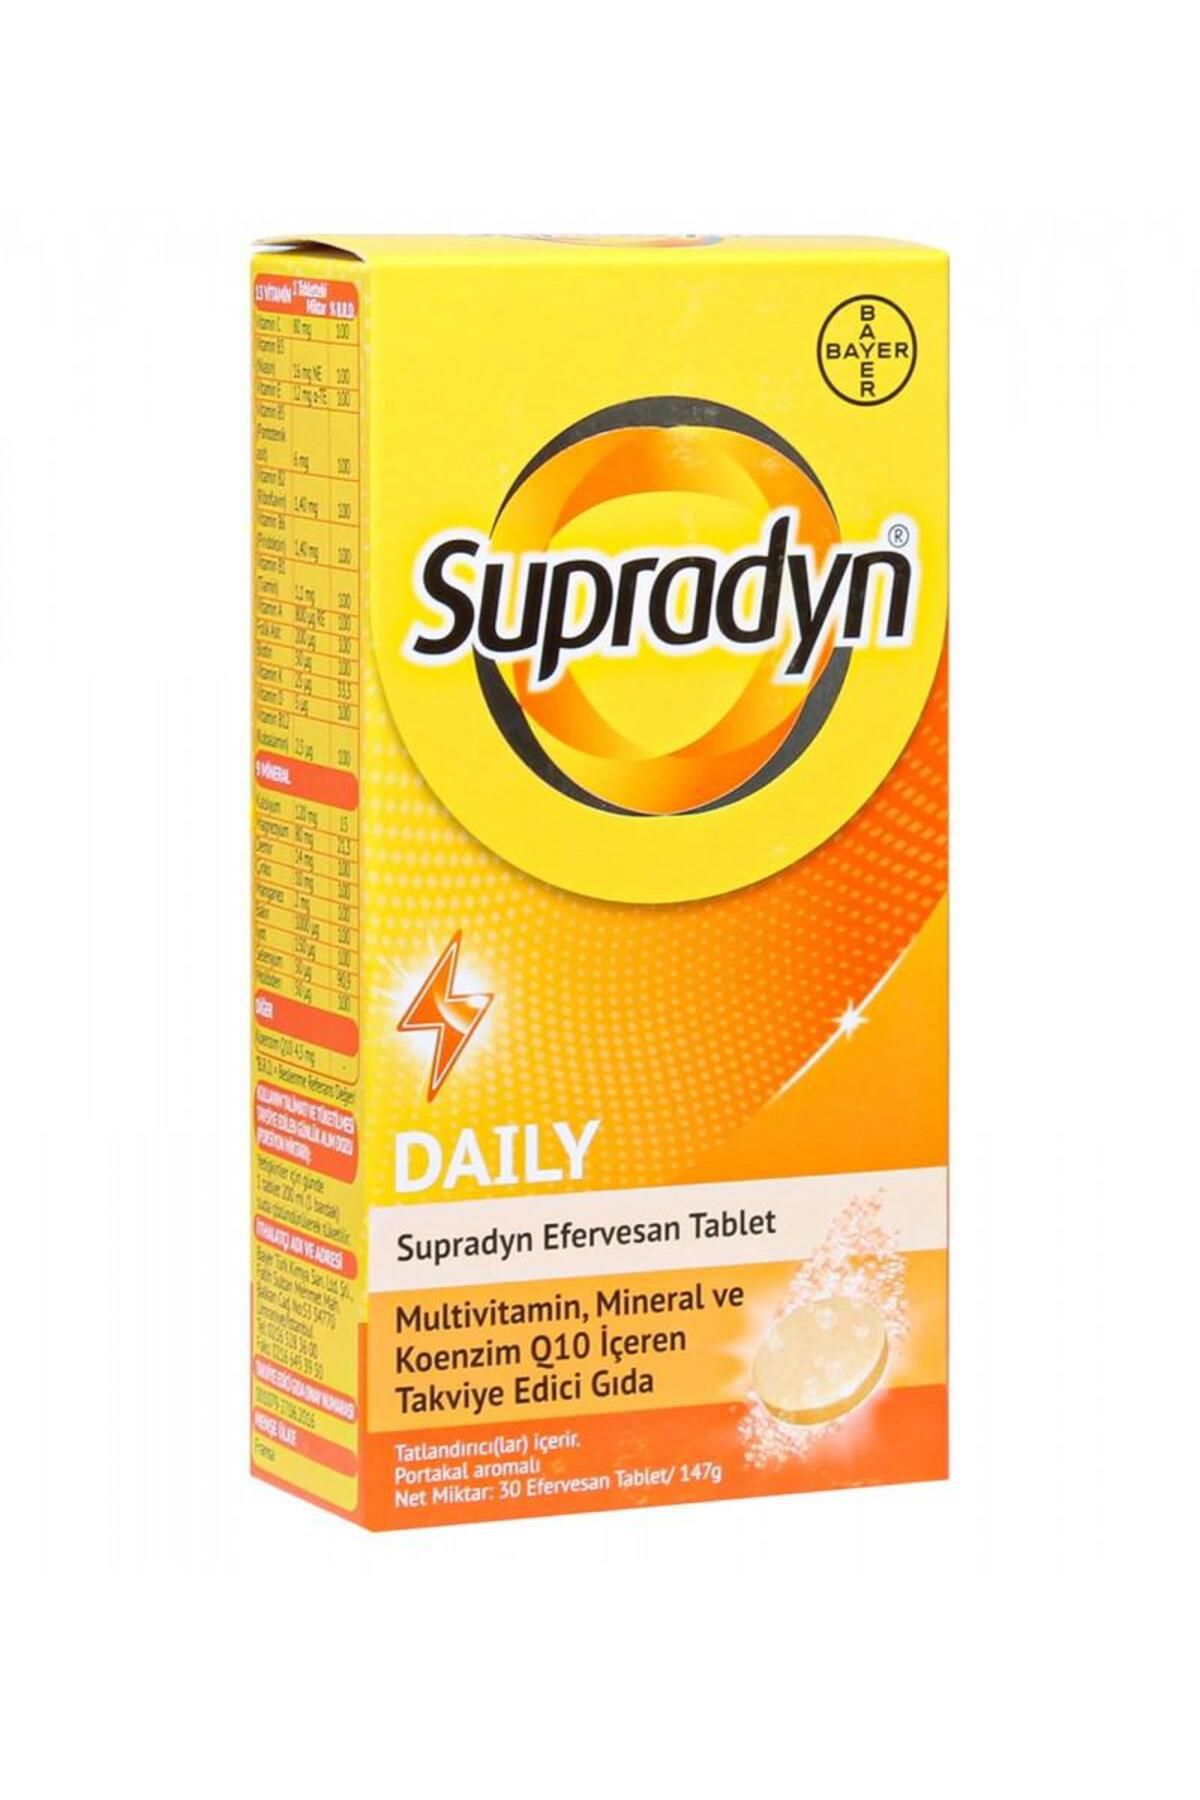 Supradyn Vitamin, Mineral ve Koenzim Q10 İçeren 30 Efervesan Tablet